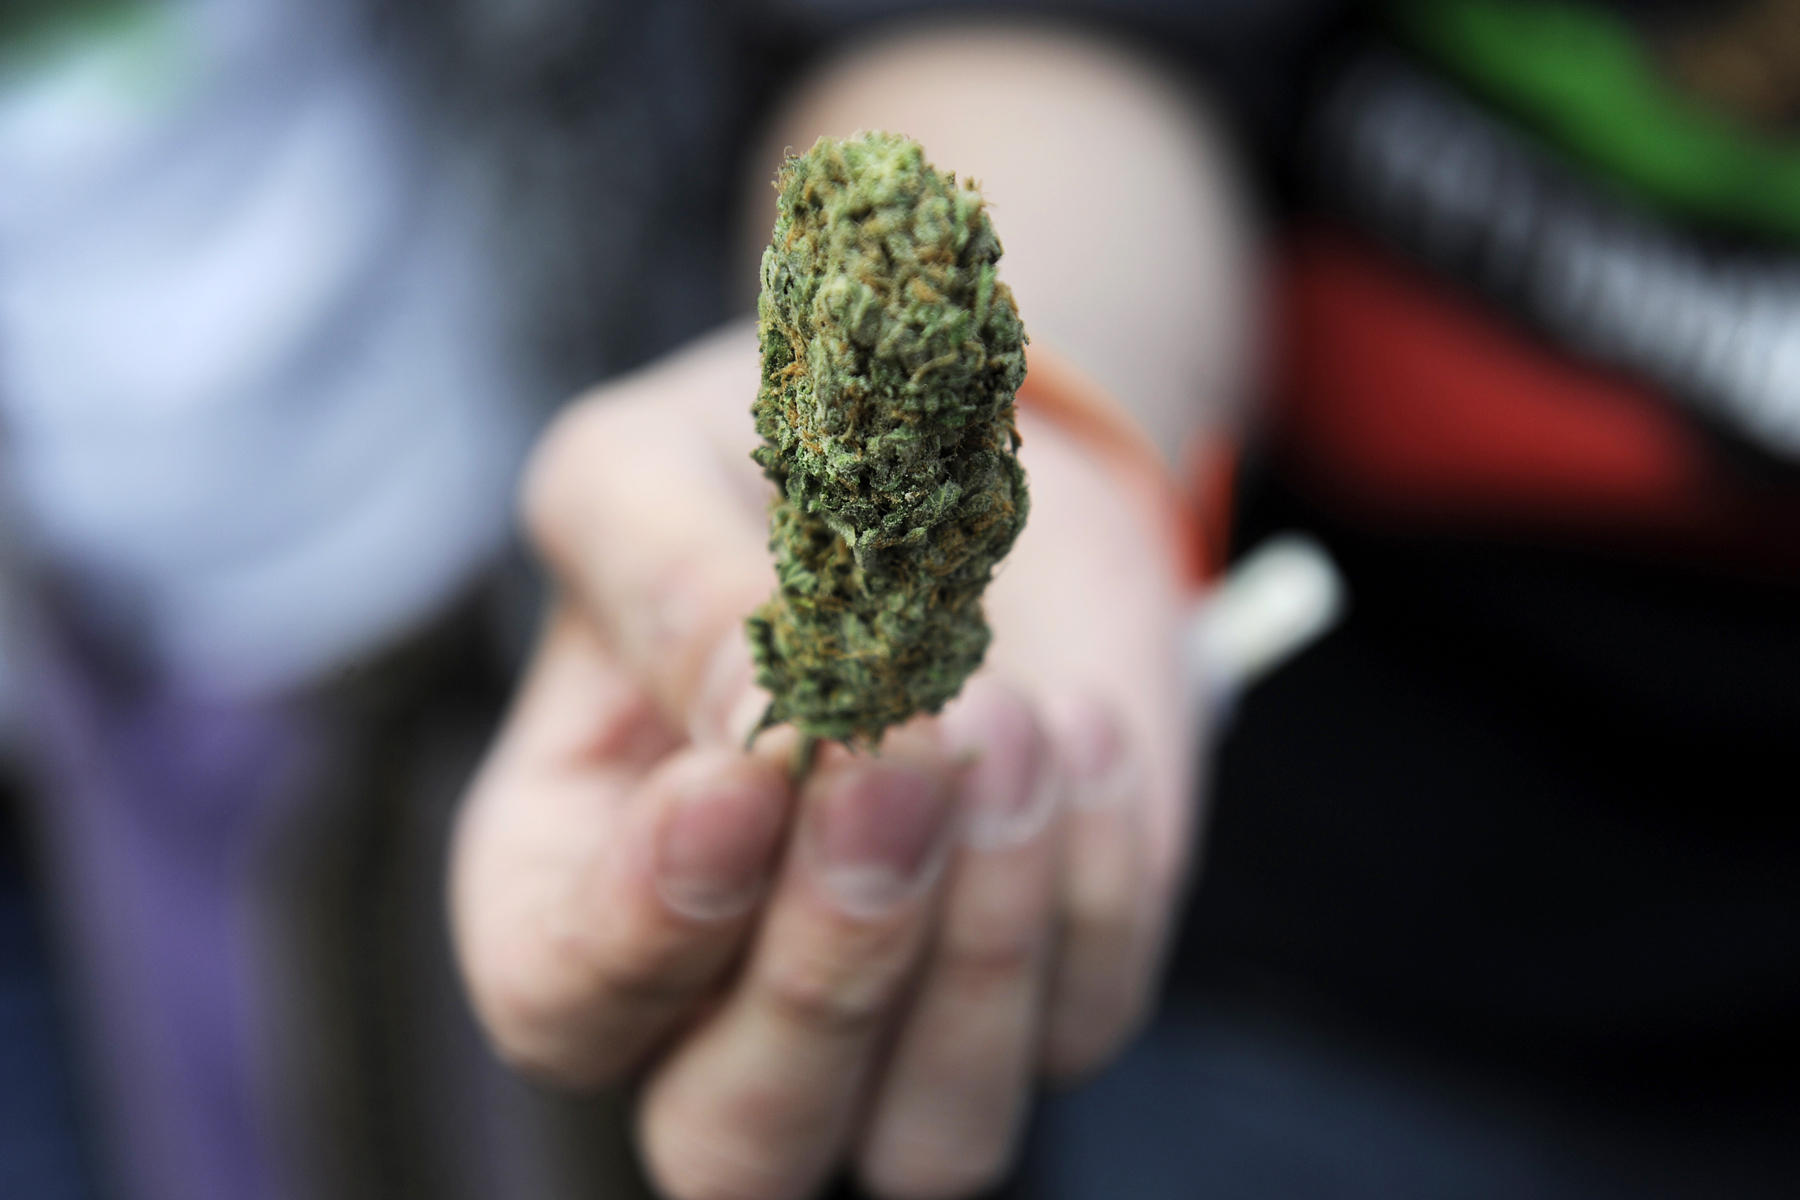 New York: Legislation Pending to Eliminate ‘Public View’ Marijuana Possession Arrests